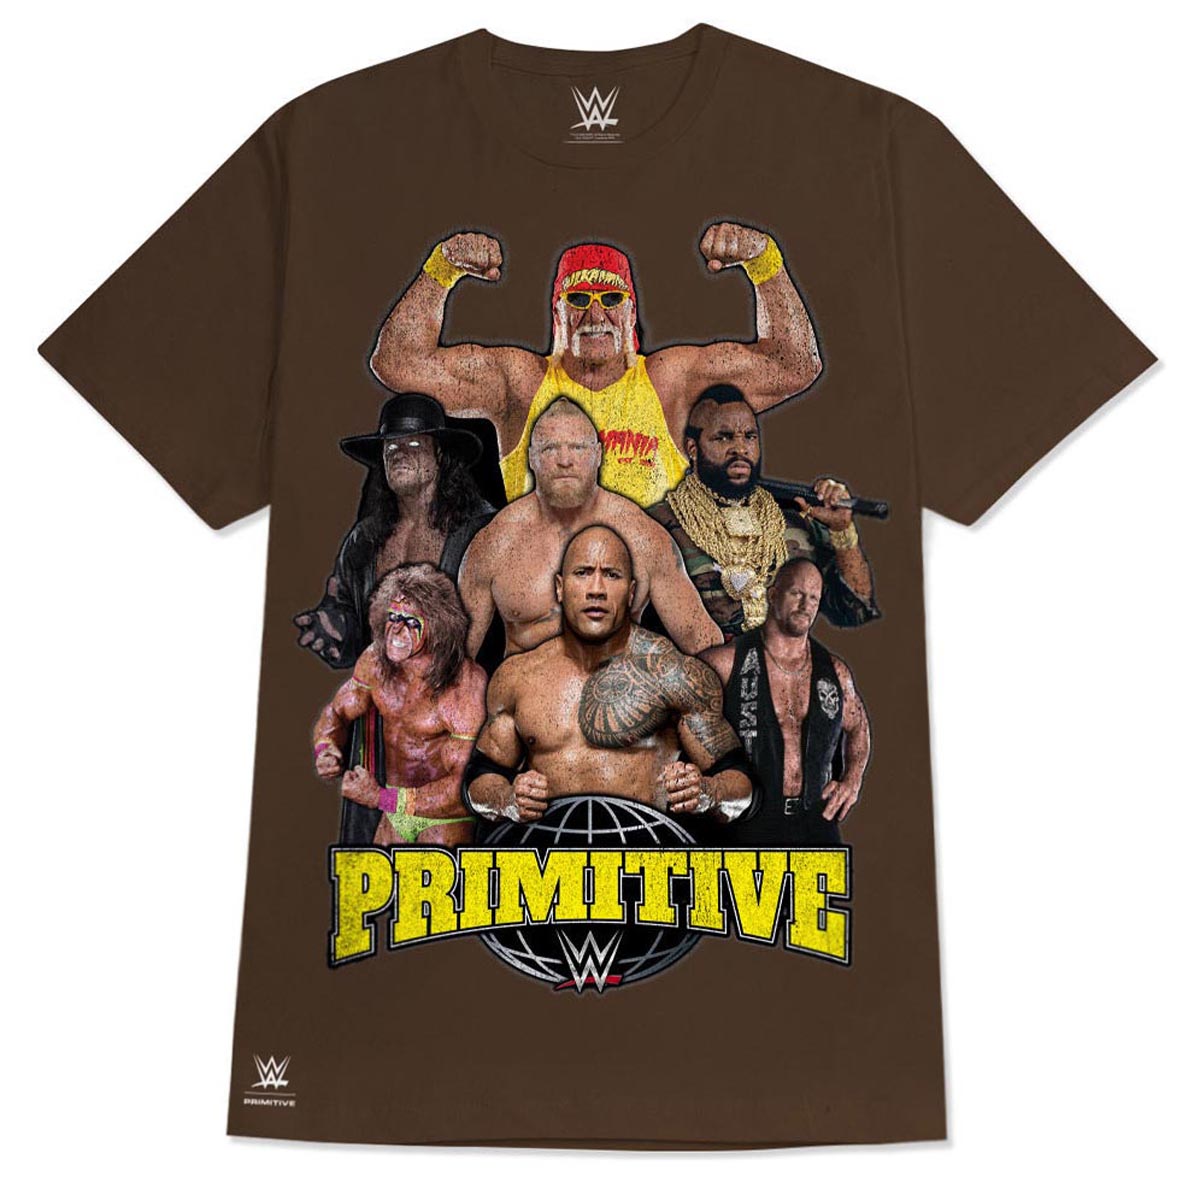 Primitive x WWE Mania T-Shirt - Brown image 1